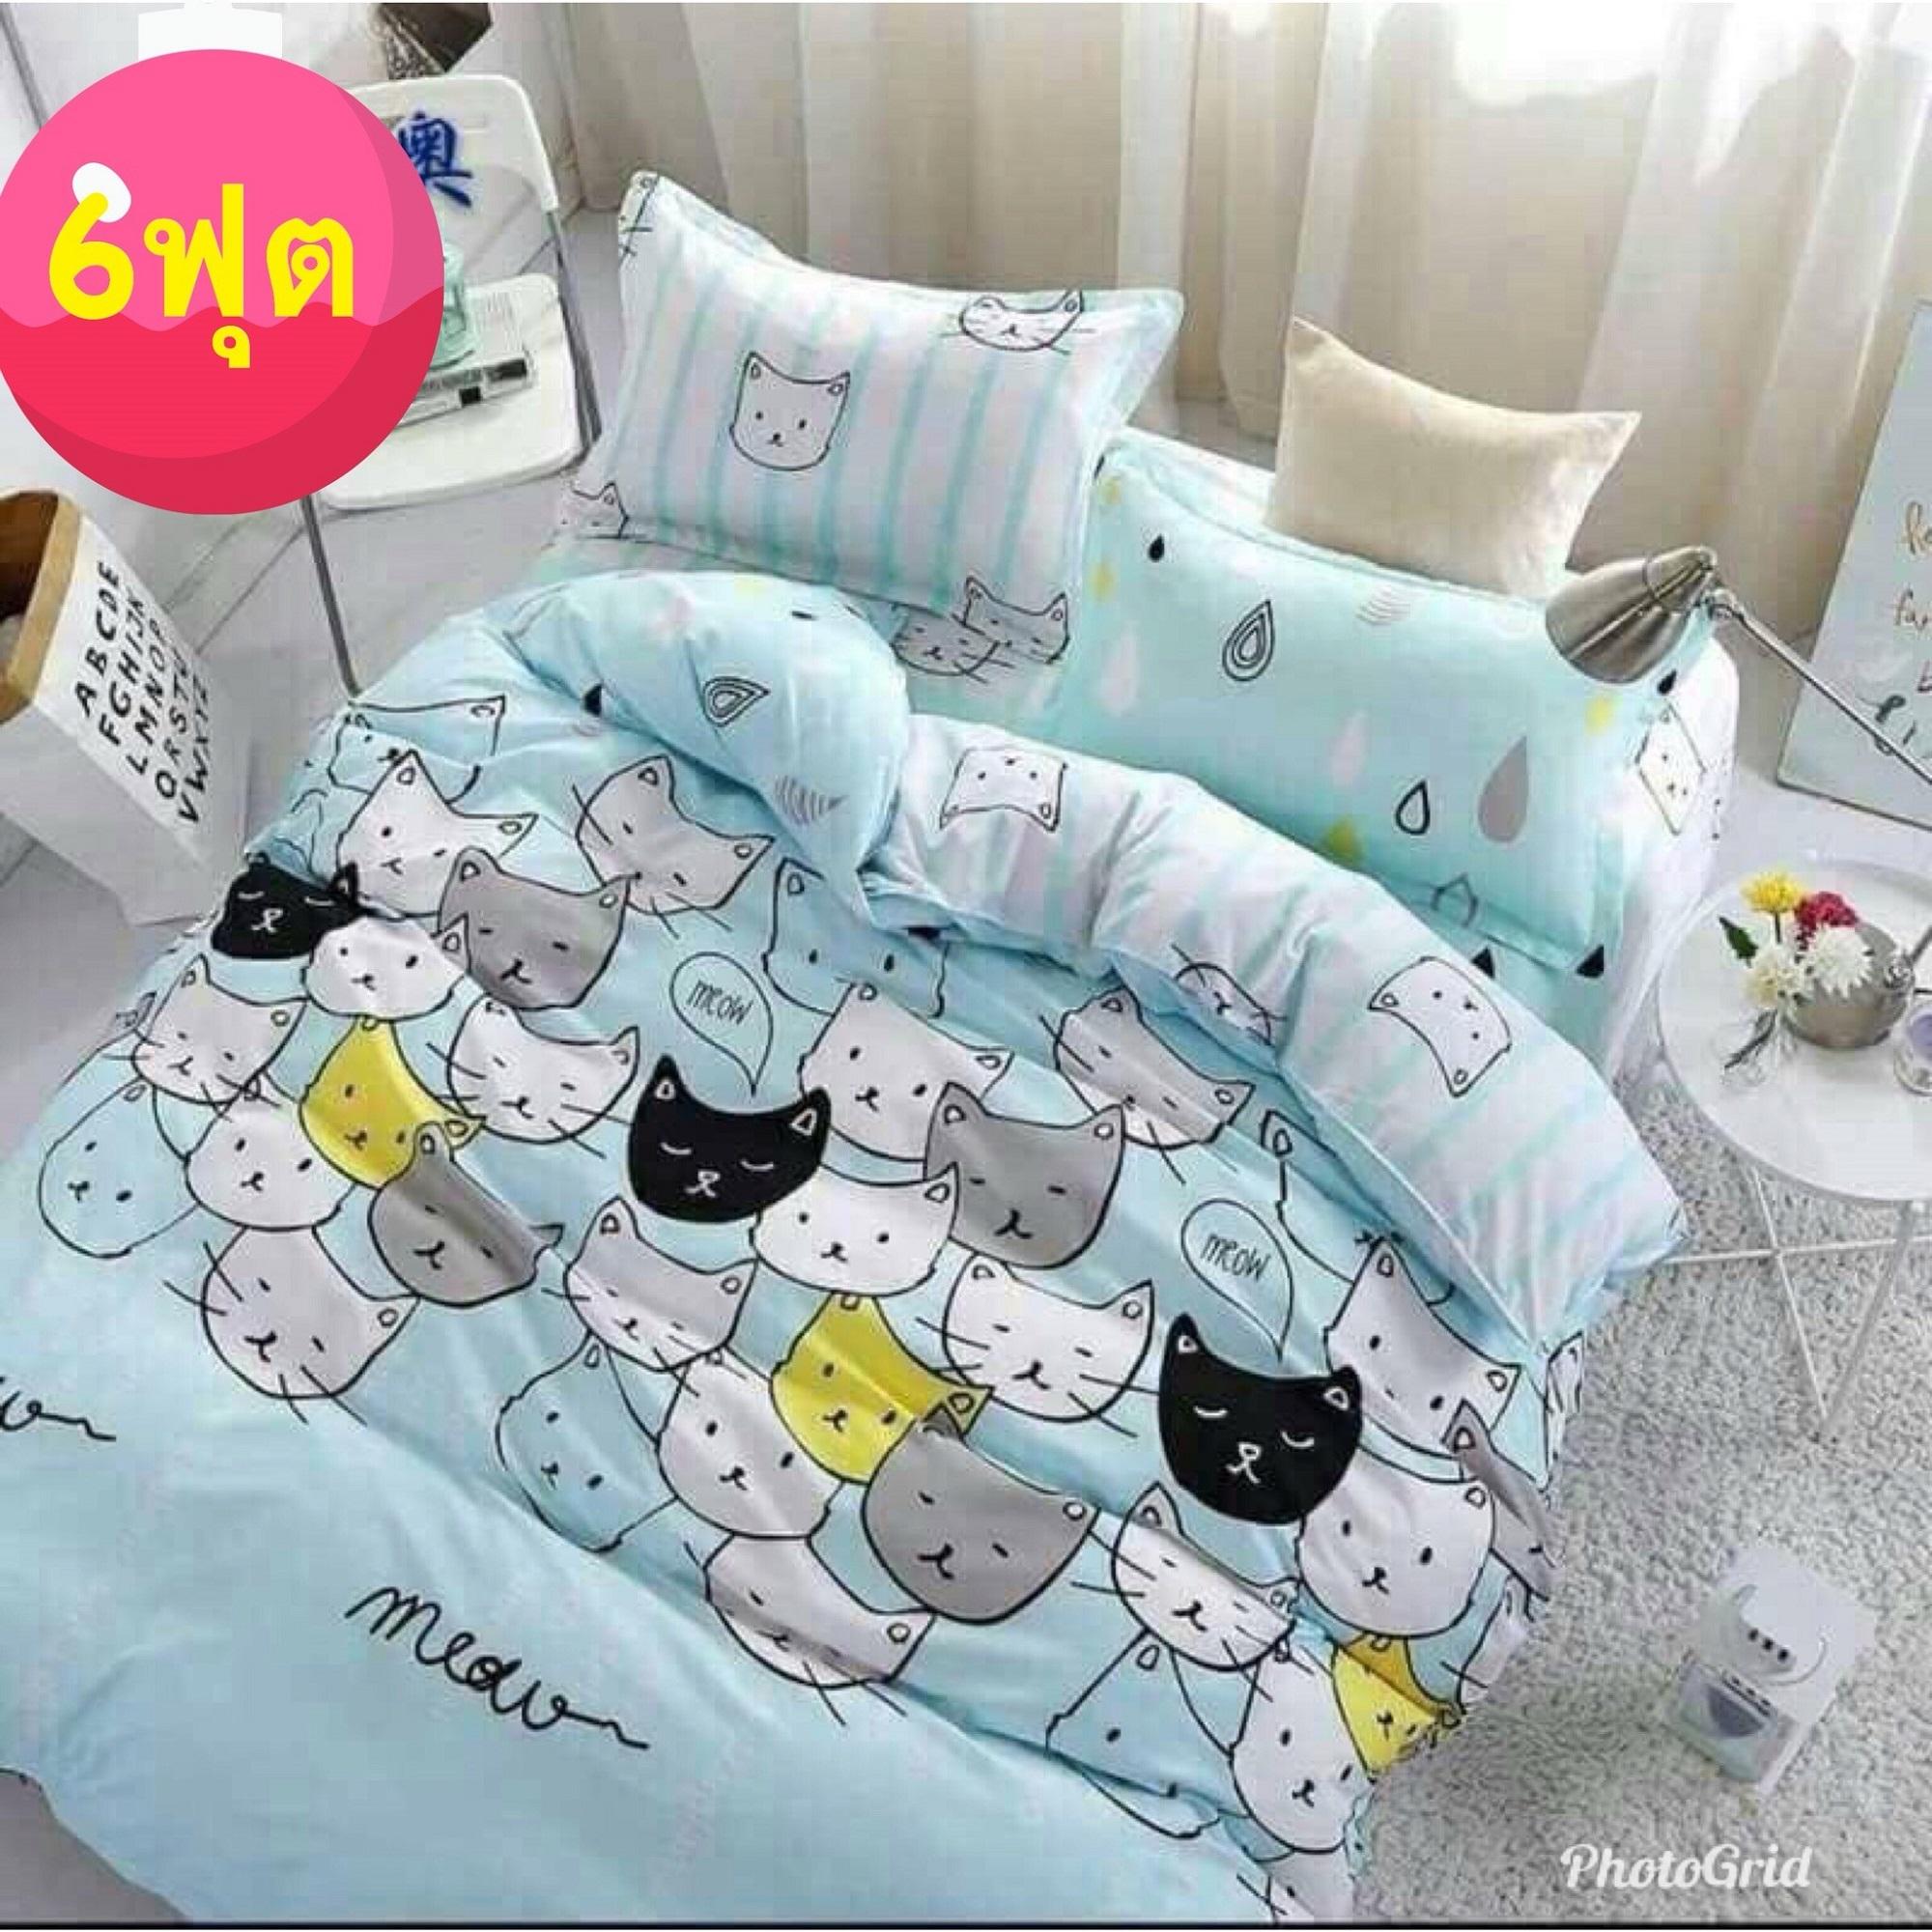 Buyyub เซ็ทชุดผ้าปูที่นอน+ผ้านวมมาตรฐาน 6 ฟุต ลายแมว สีฟ้าอ่อน